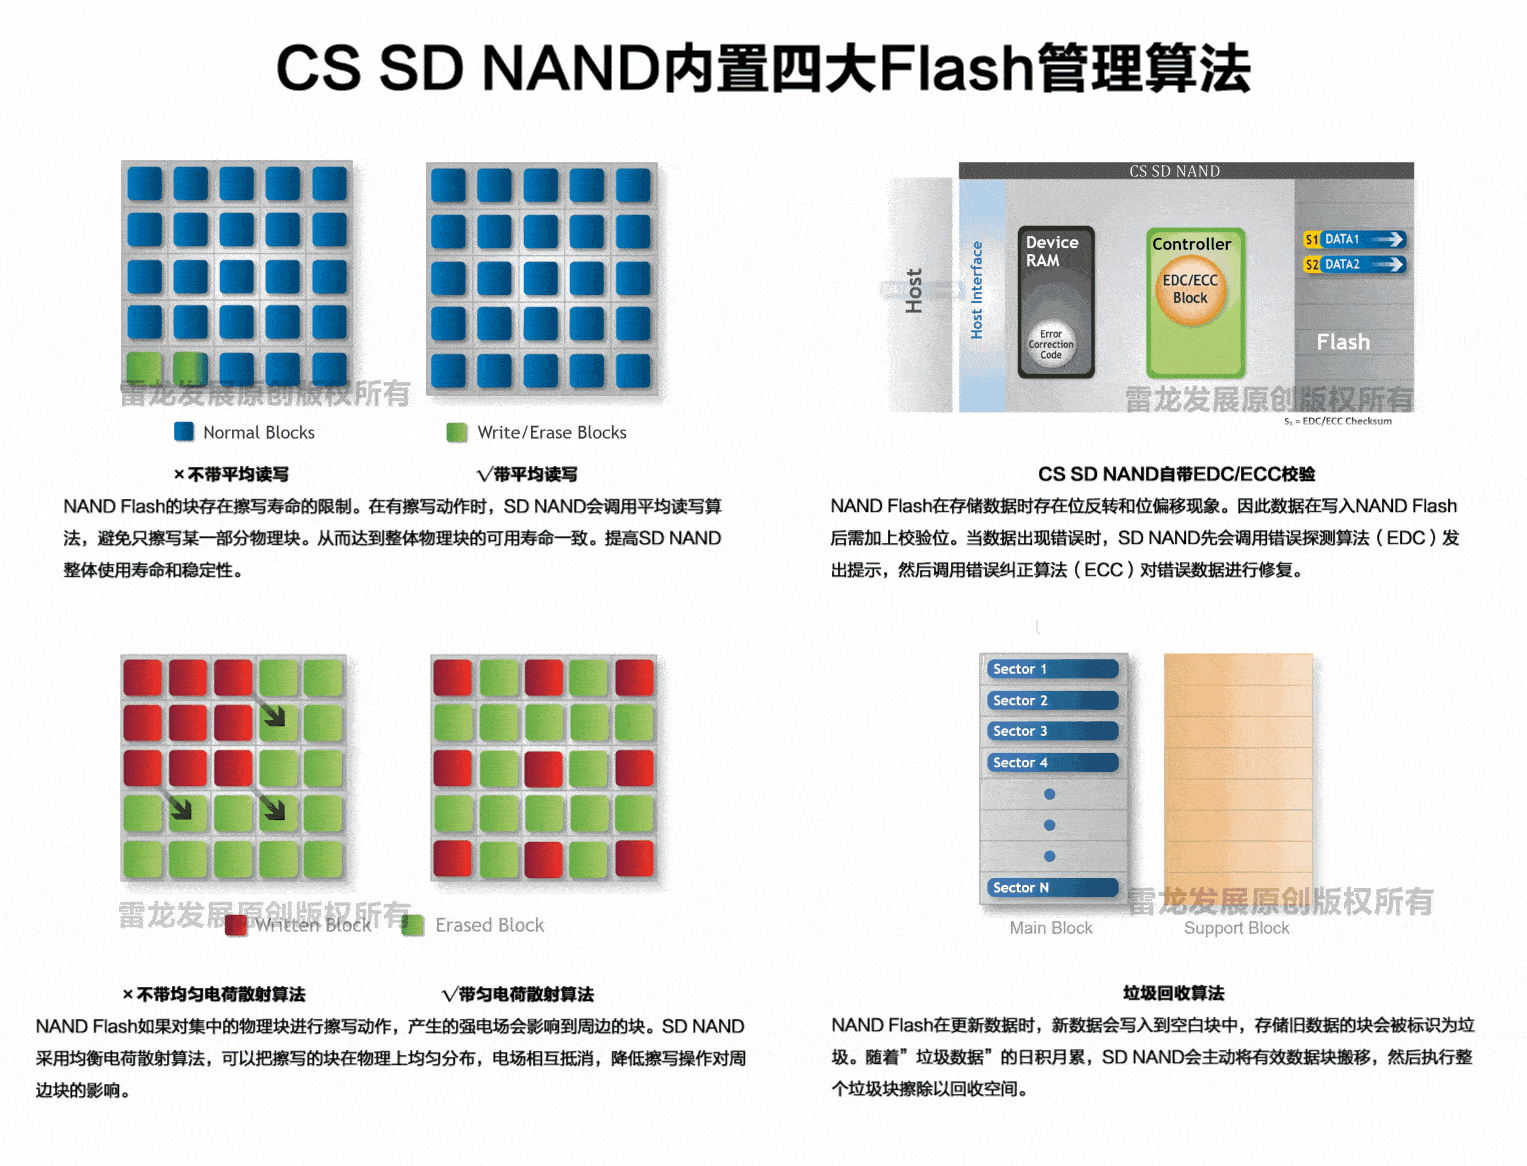 NOR Flash 和 NAND Flash 闪存详解「终于解决」